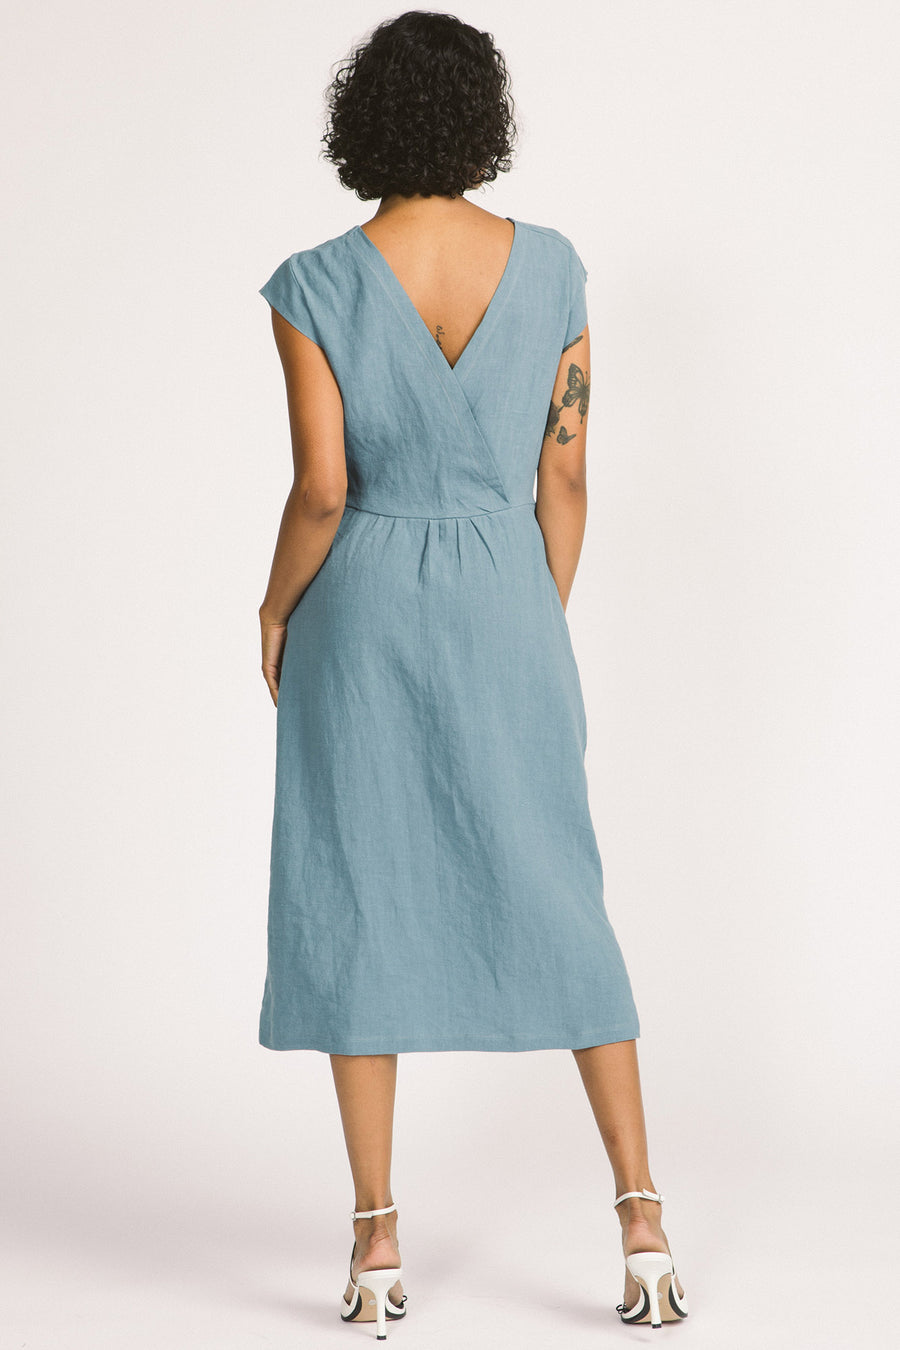 Back view of woman wearing sky blue button up linen midi Blythe dress by Allison Wonderland. 